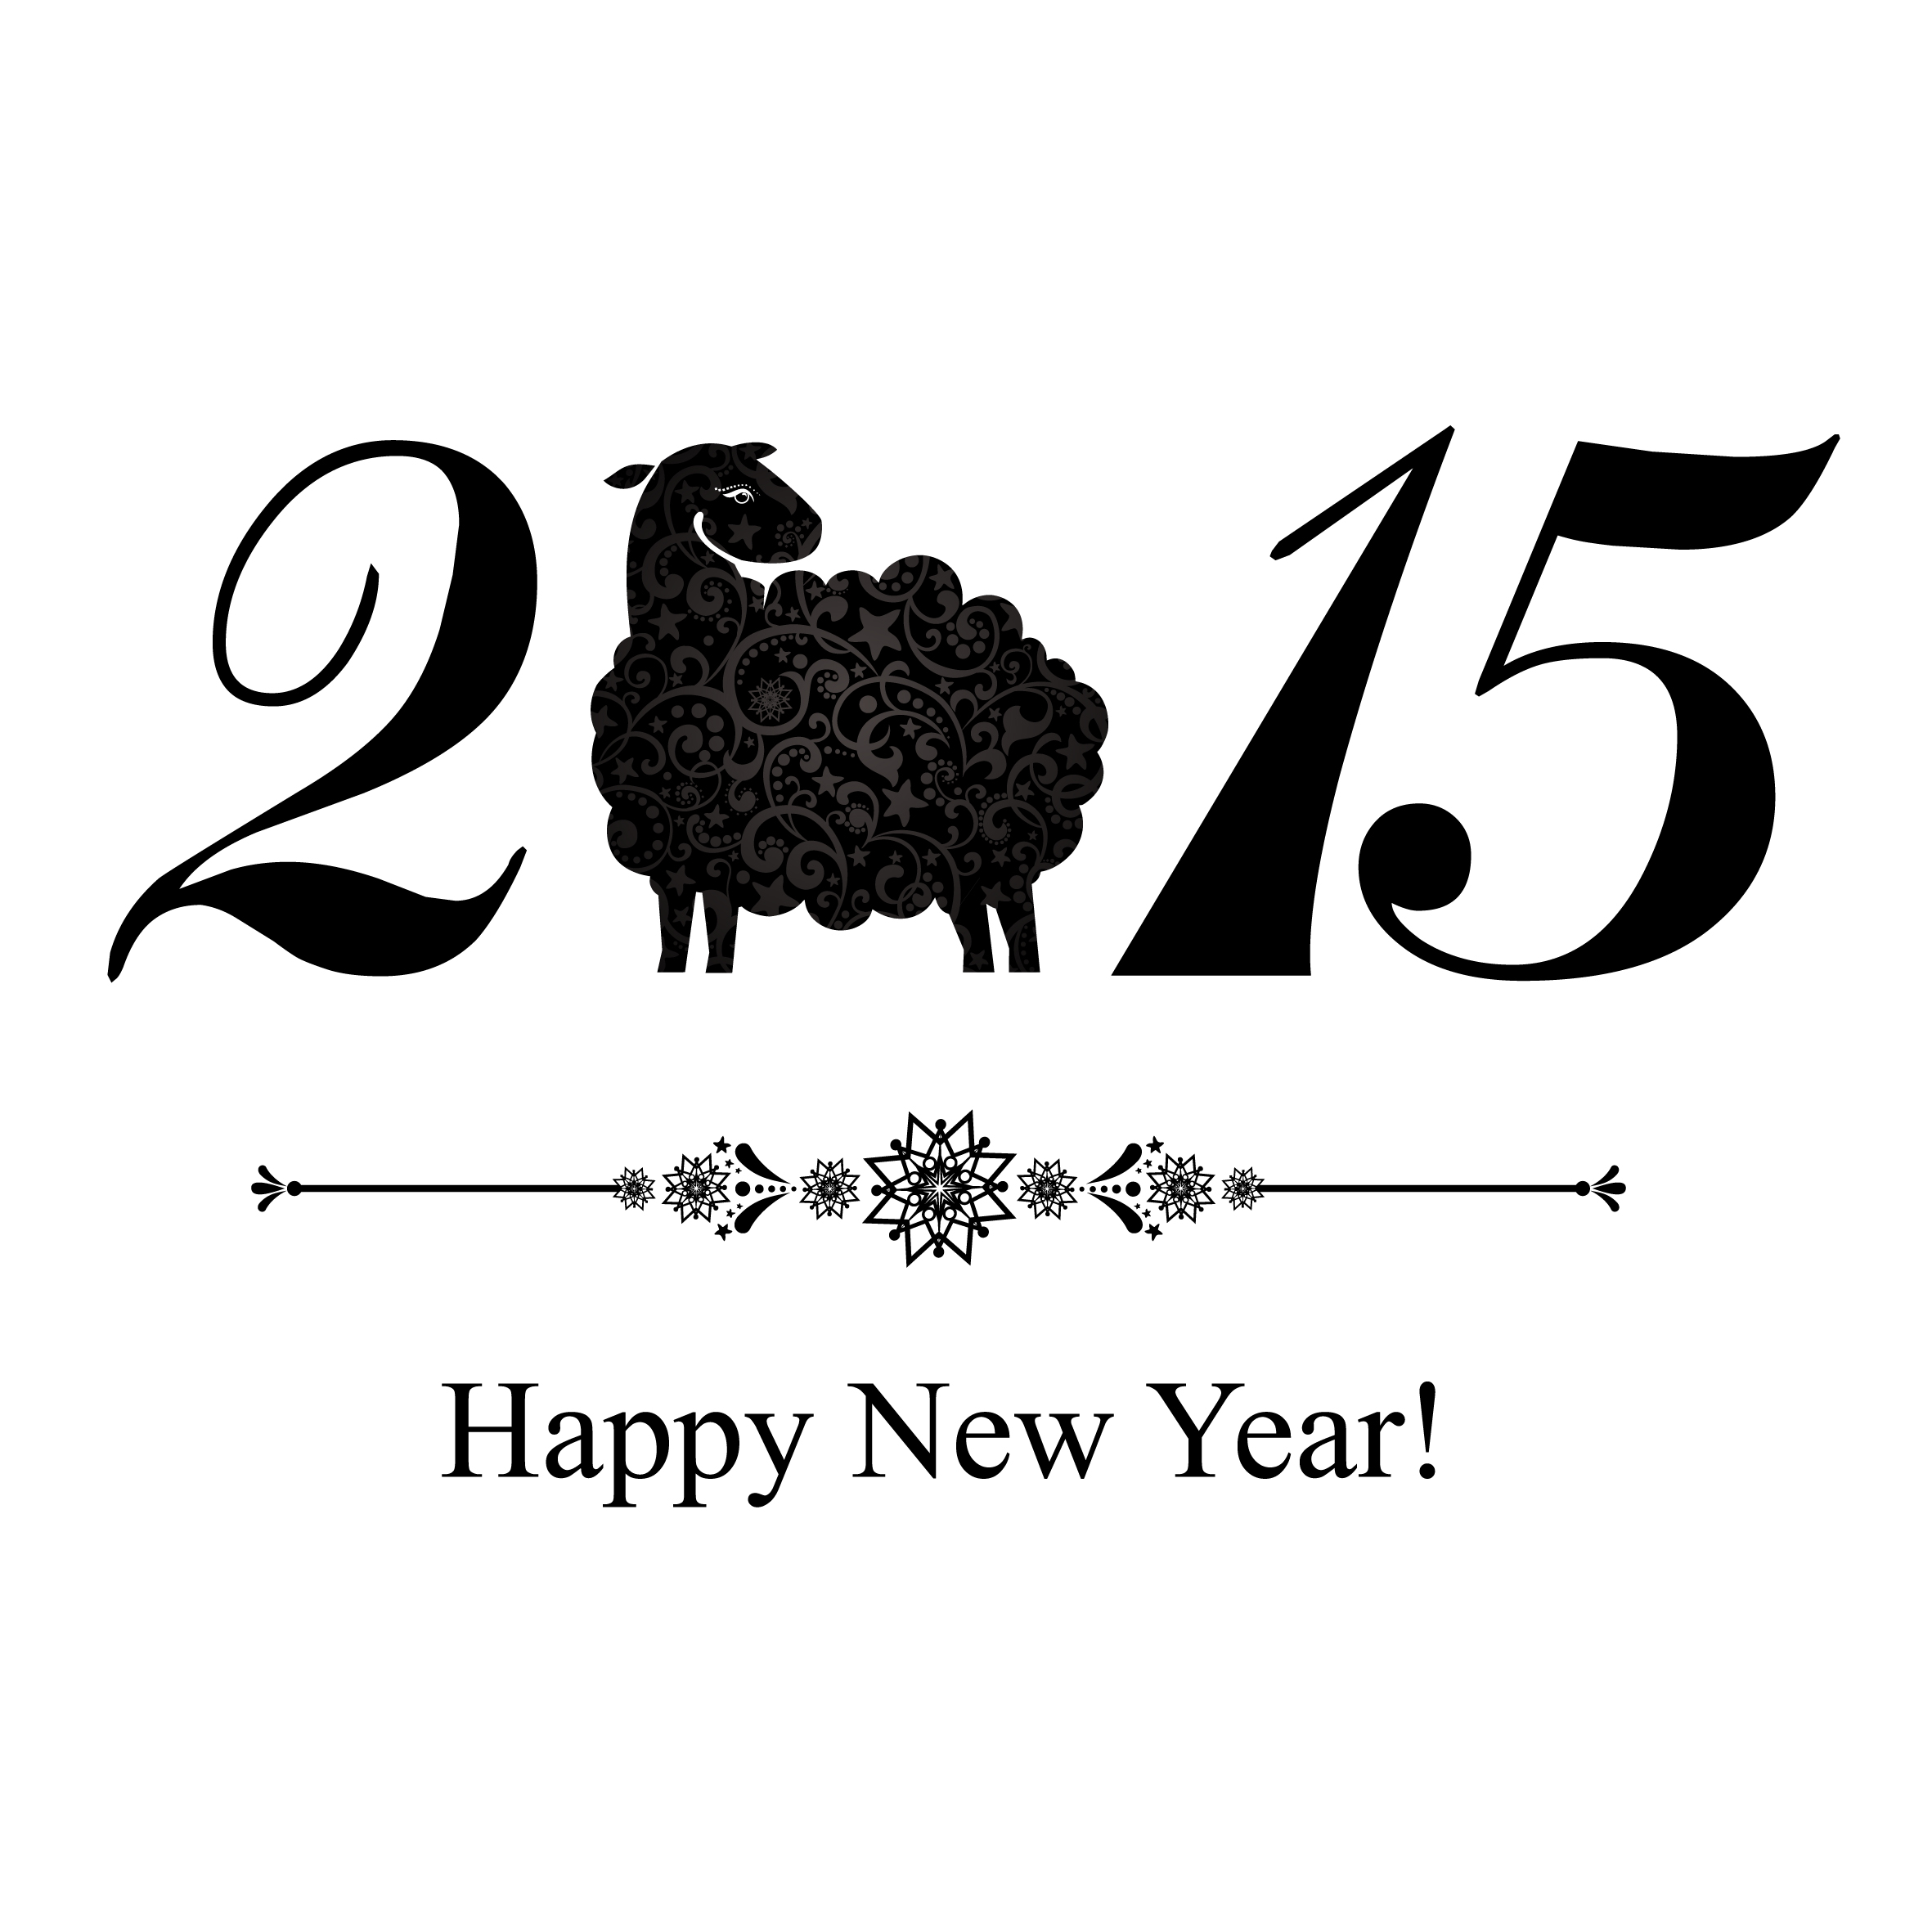 2015 sheep year background creative vector 03  